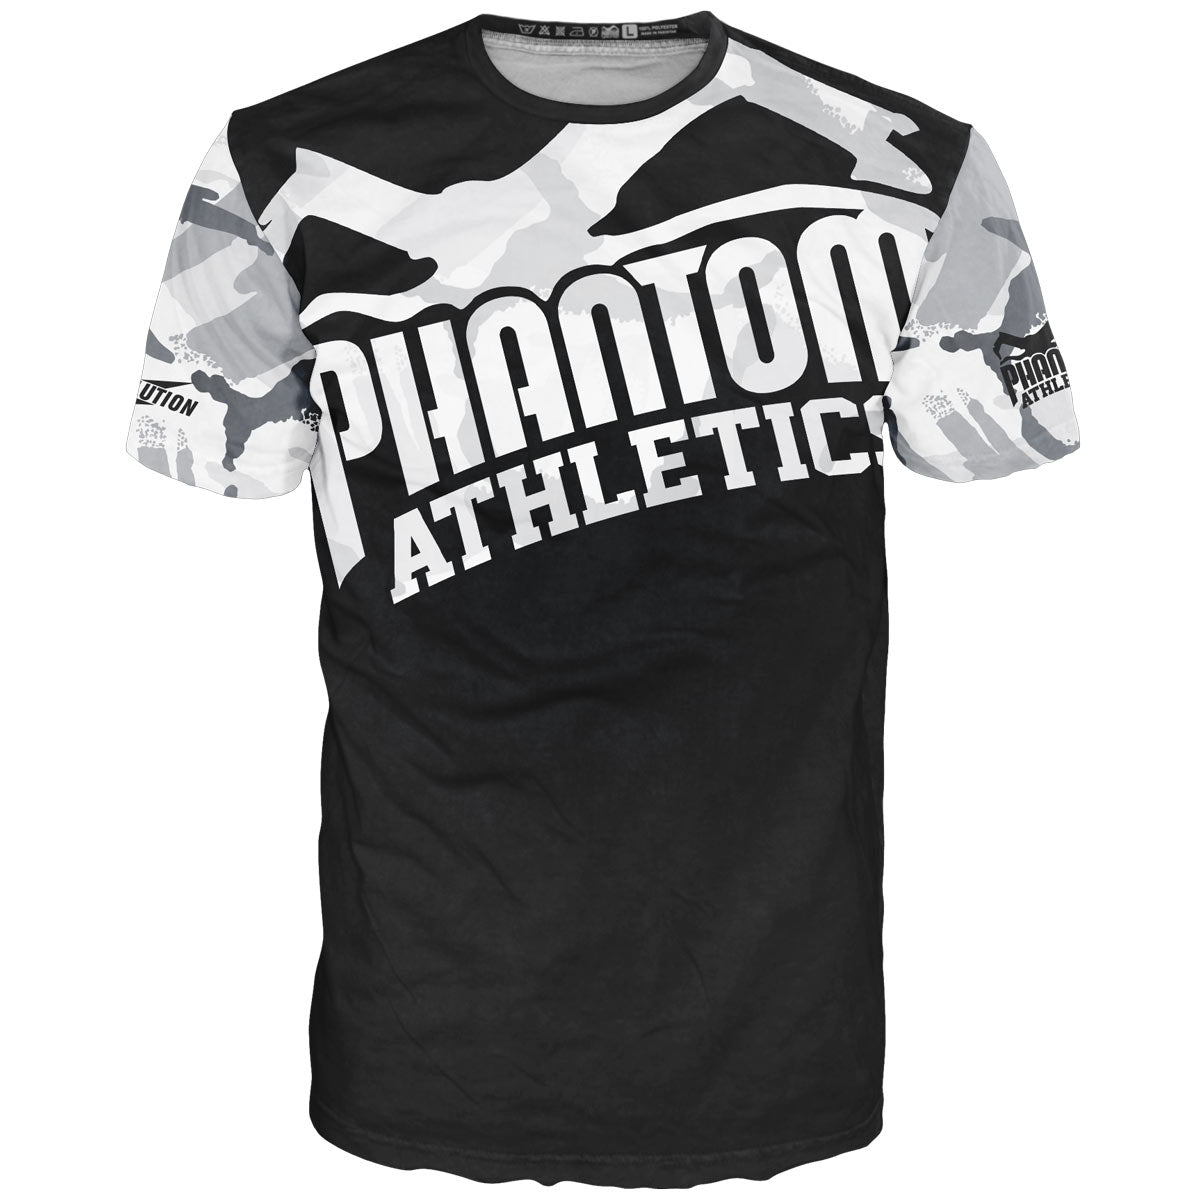 Camiseta de entrenamiento Phantom Kampfsport EVO con aspecto de camuflaje urbano/invernal. Camiseta de entrenamiento de alto rendimiento transpirable para MMA, Muay Thai, BJJ y kickboxing.